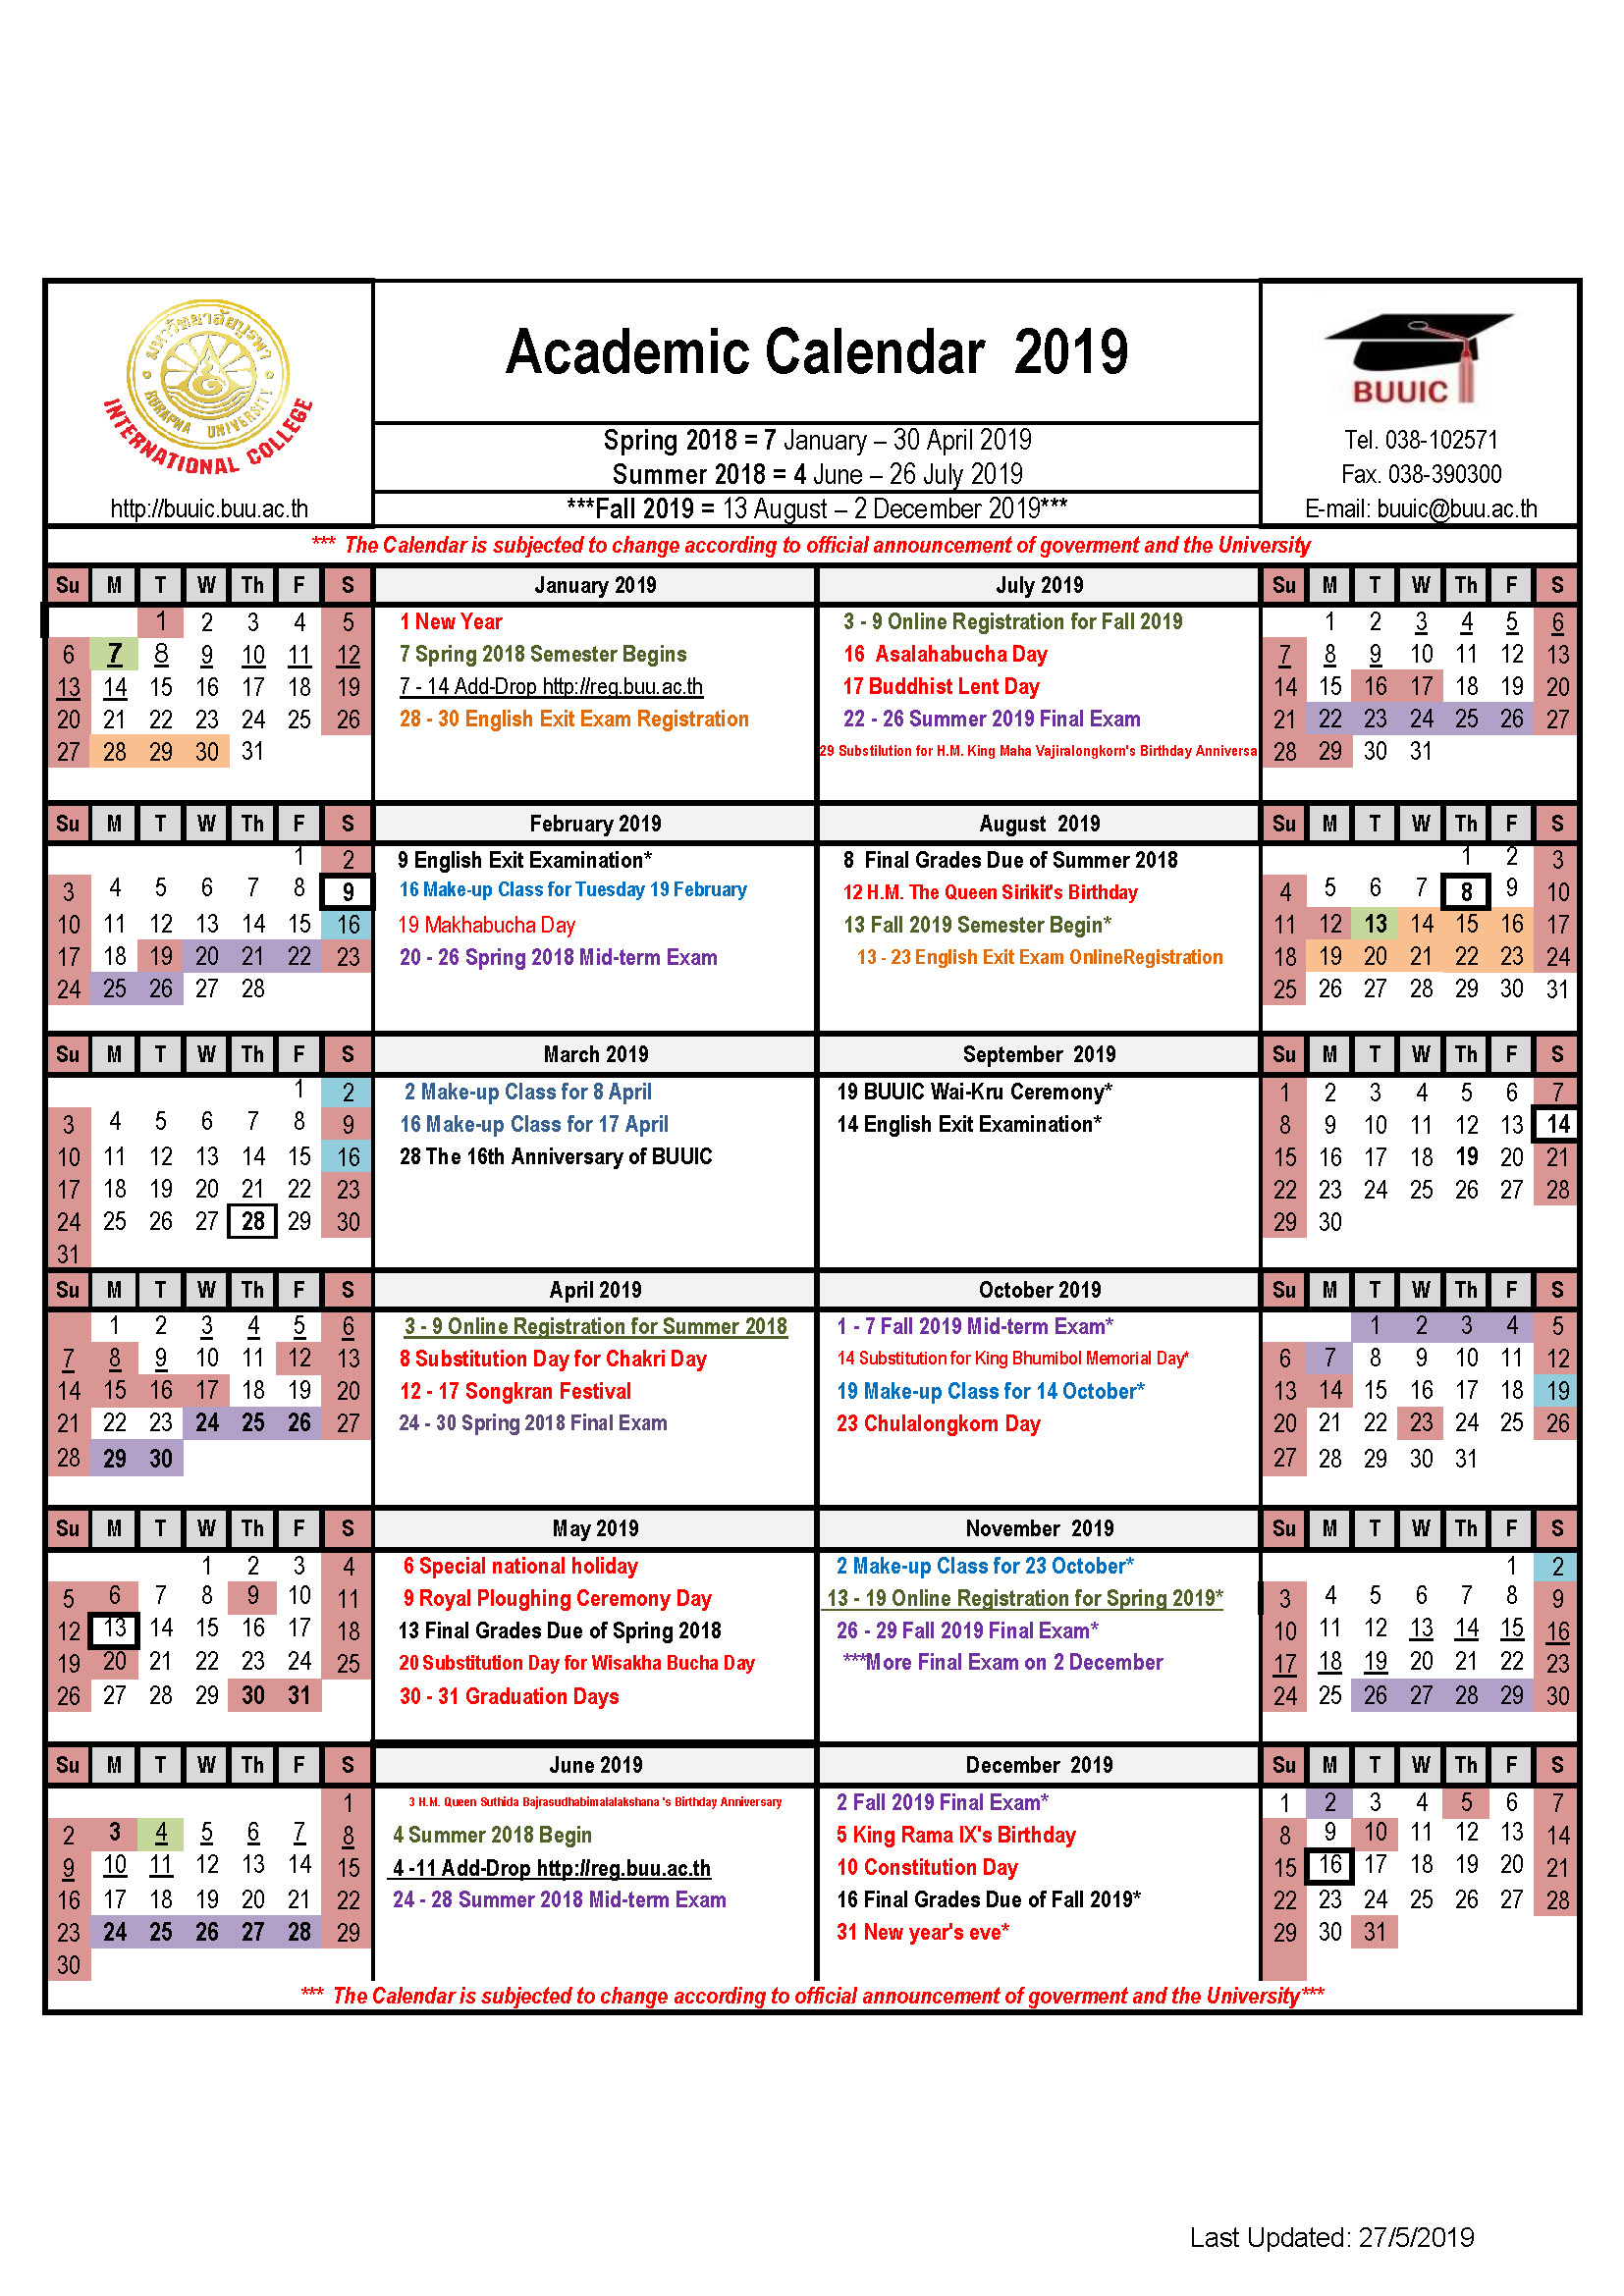 Allen University Academic Calendar 20212024 2024 Calendar Printable